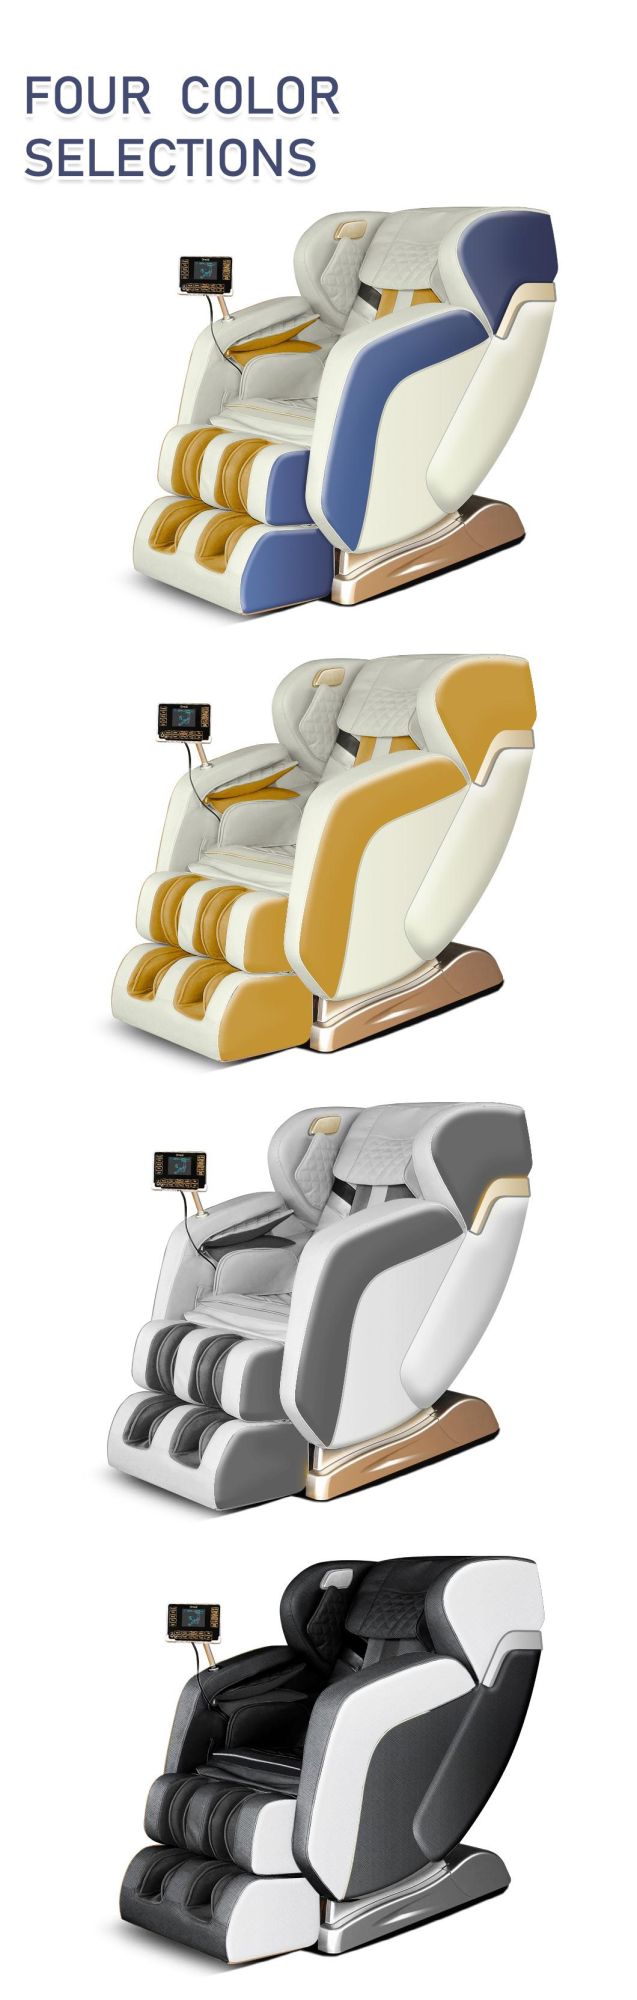 Luxury Massage Chair Multi-Functional Small Elderly Sofa Chair Full Body Electric Zero Gravity Household for Elder